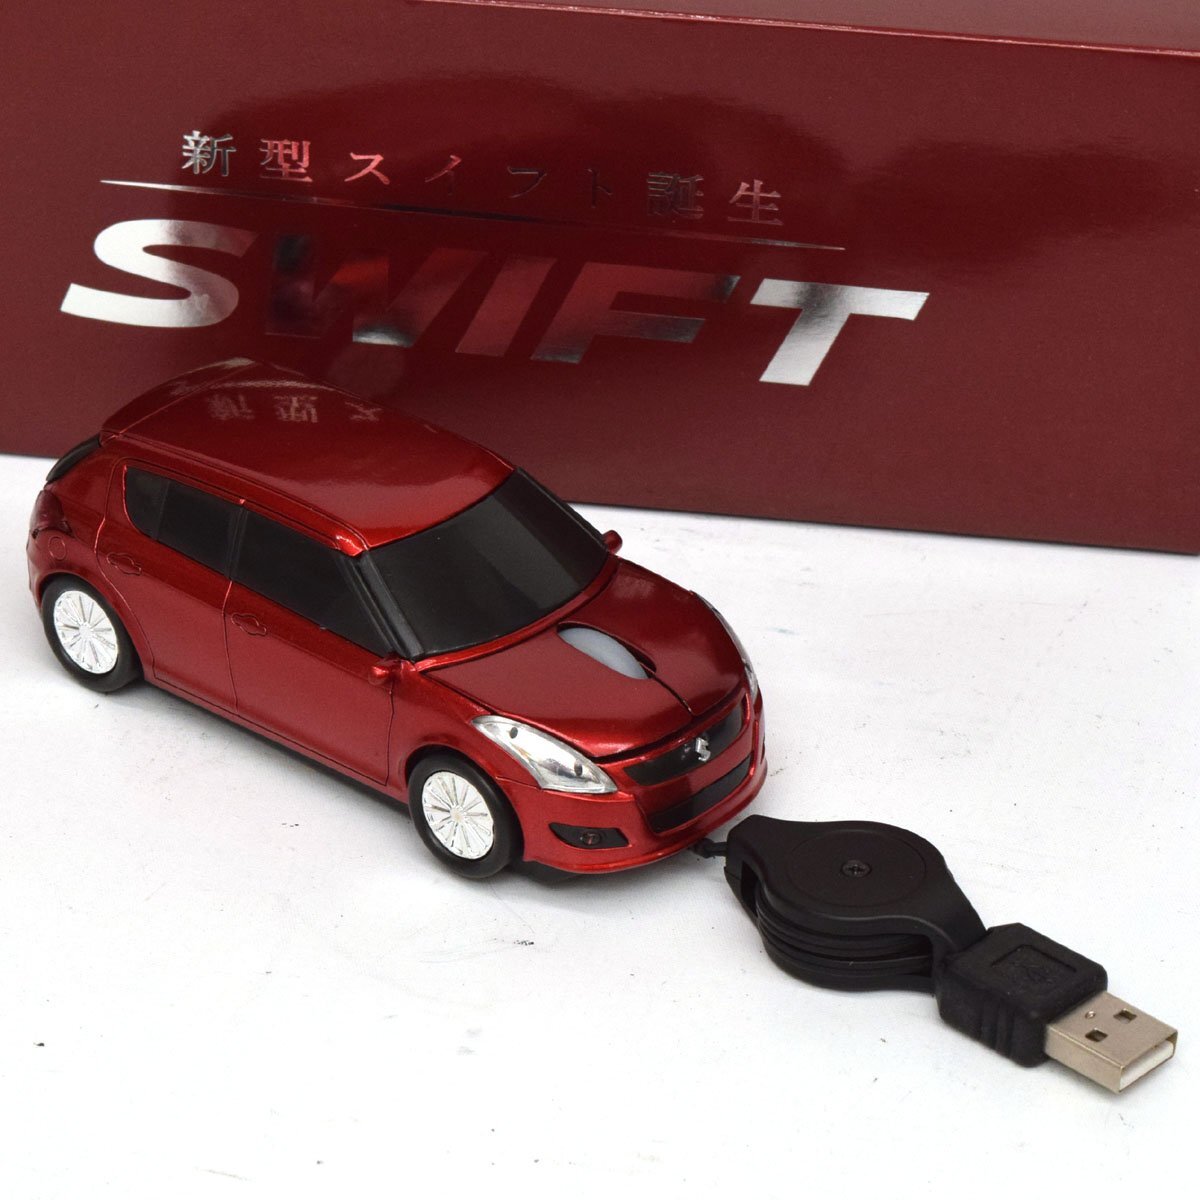 SUZUKI Swift type USB mouse Suzuki original Novelty [S207913]